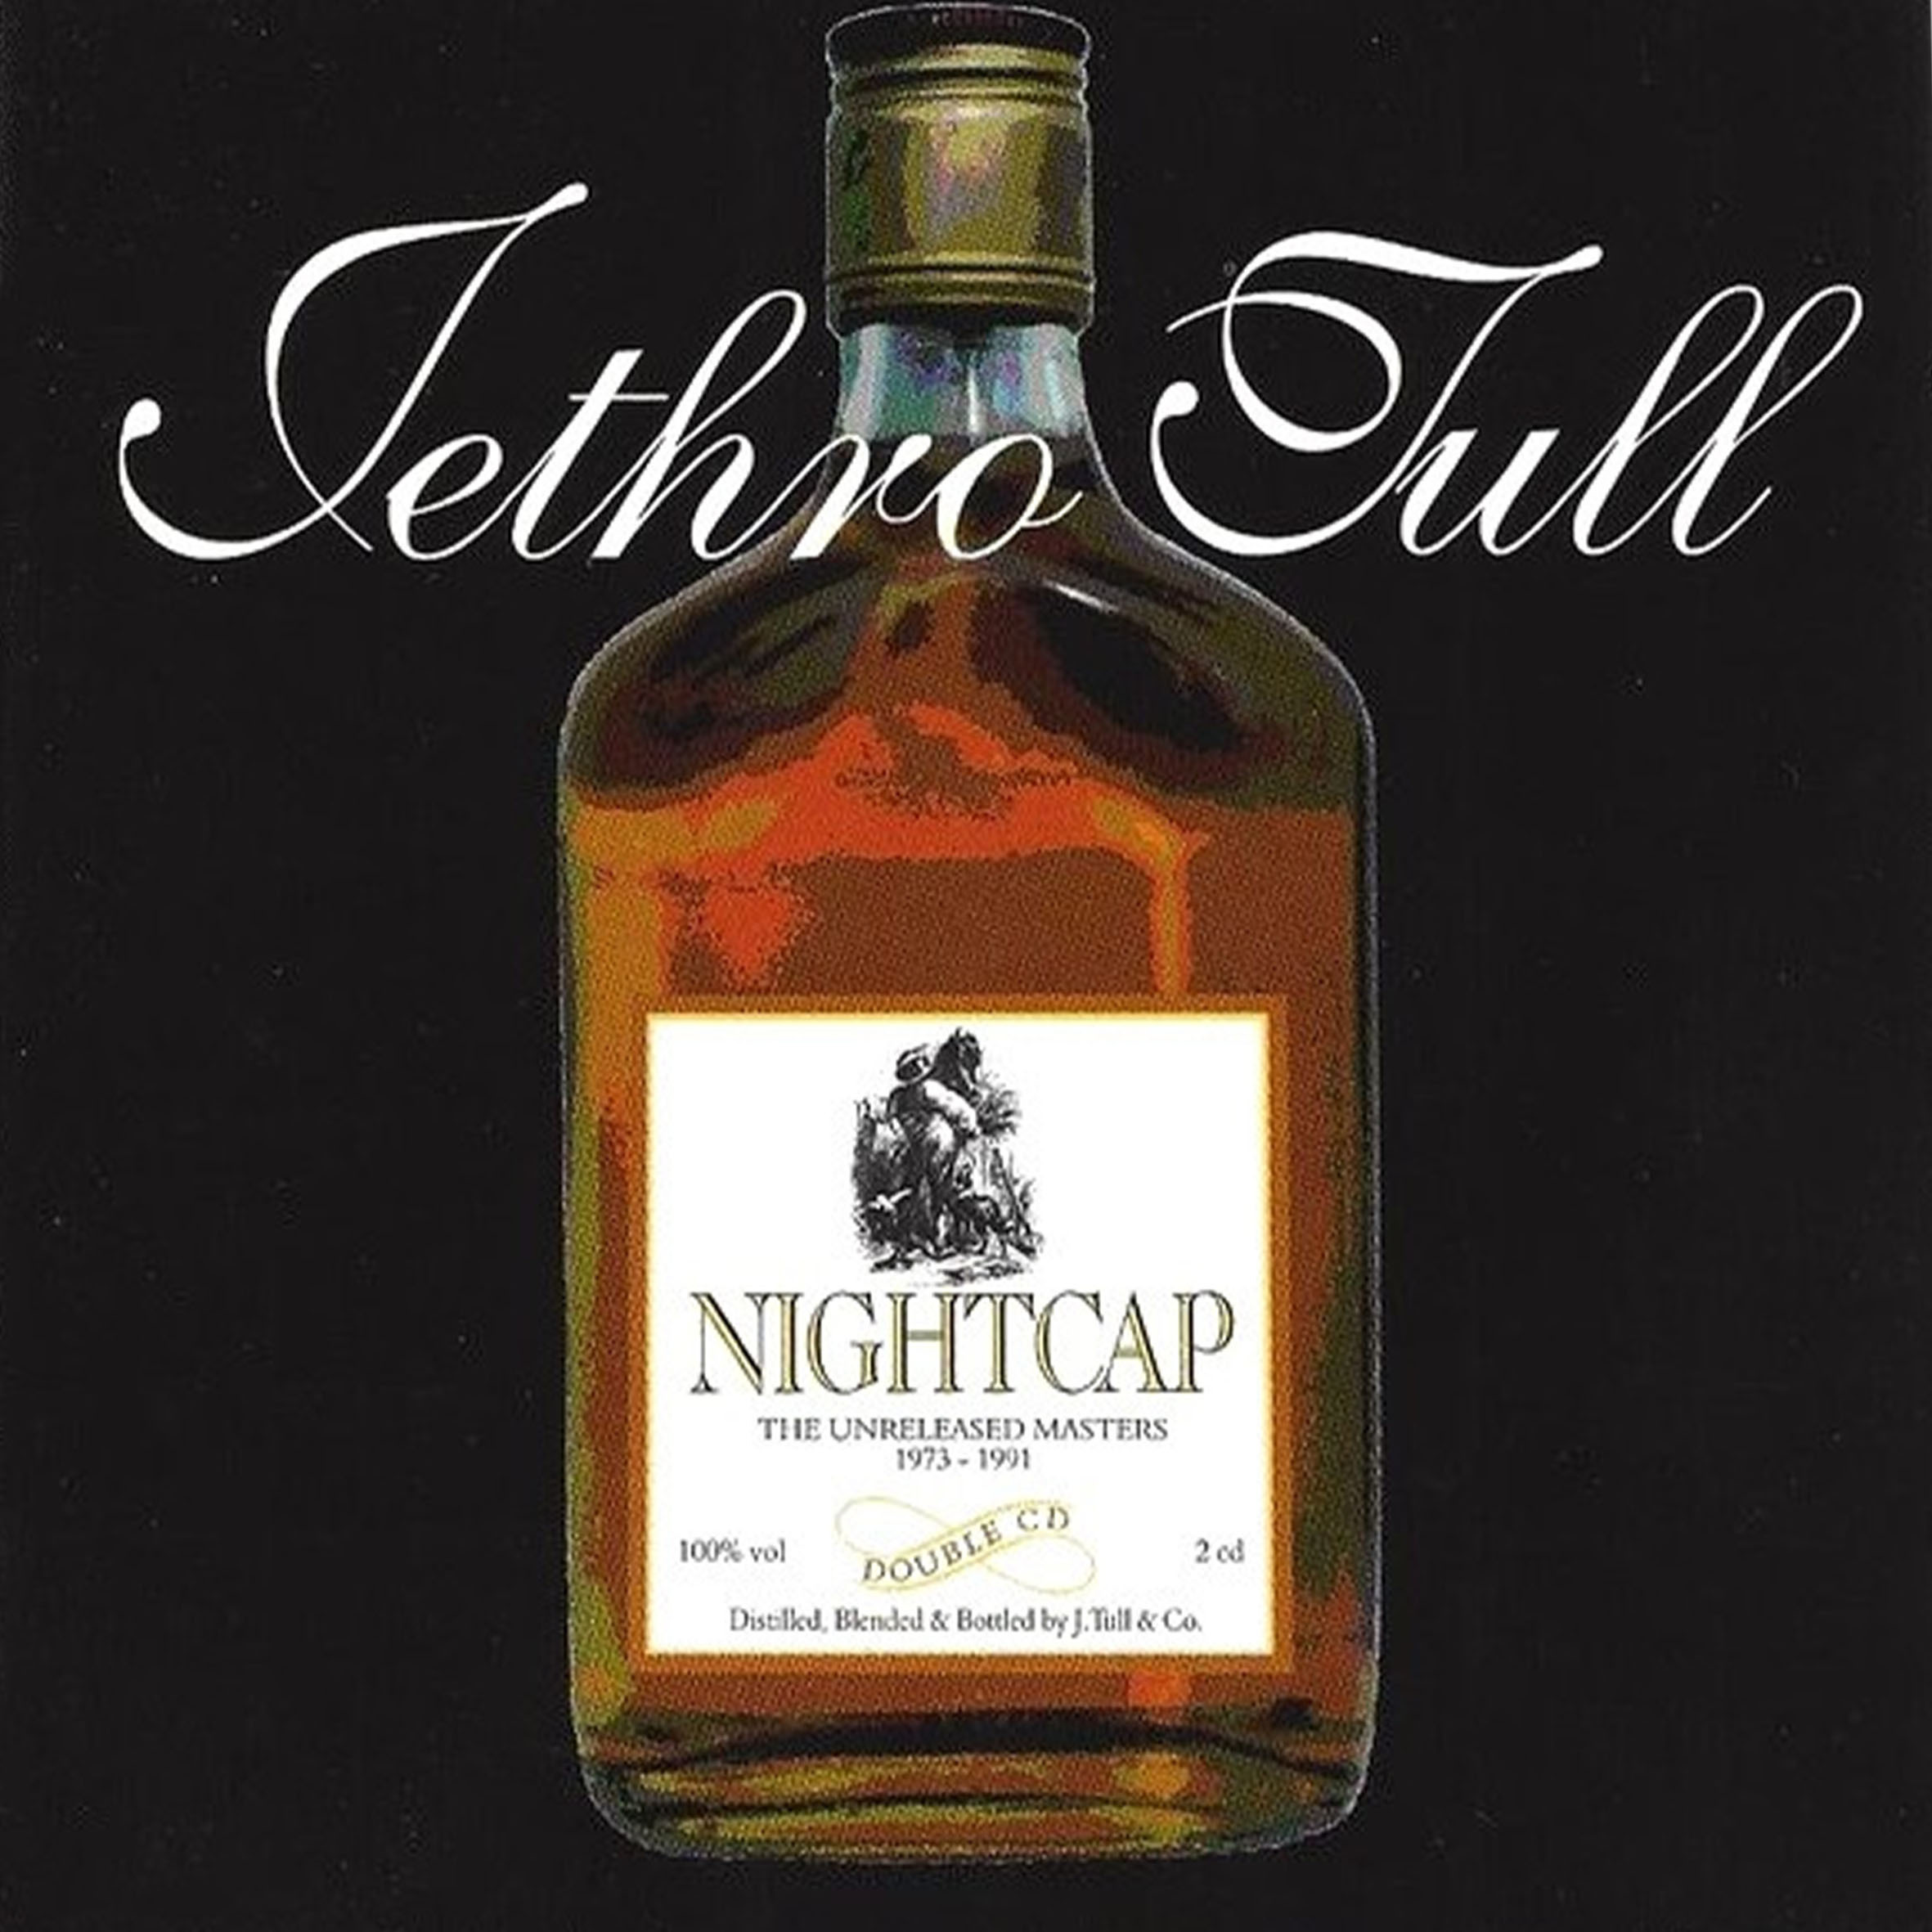 CD - Jethro Tull - Nightcap - The Unreleased Masters 1973-1991 (Holland/Duplo)